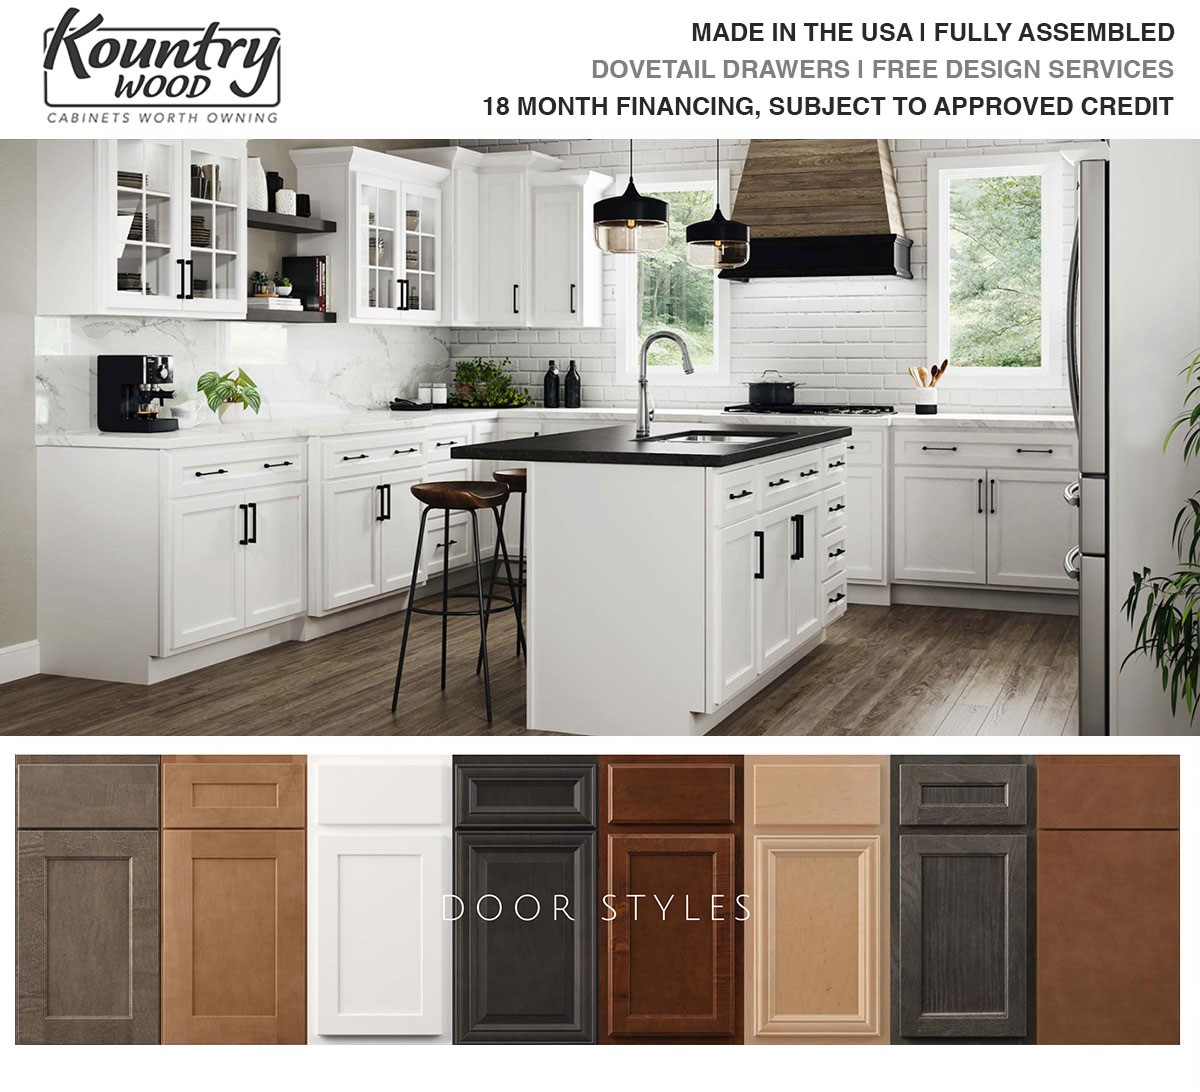 Kountrywood Cabinets